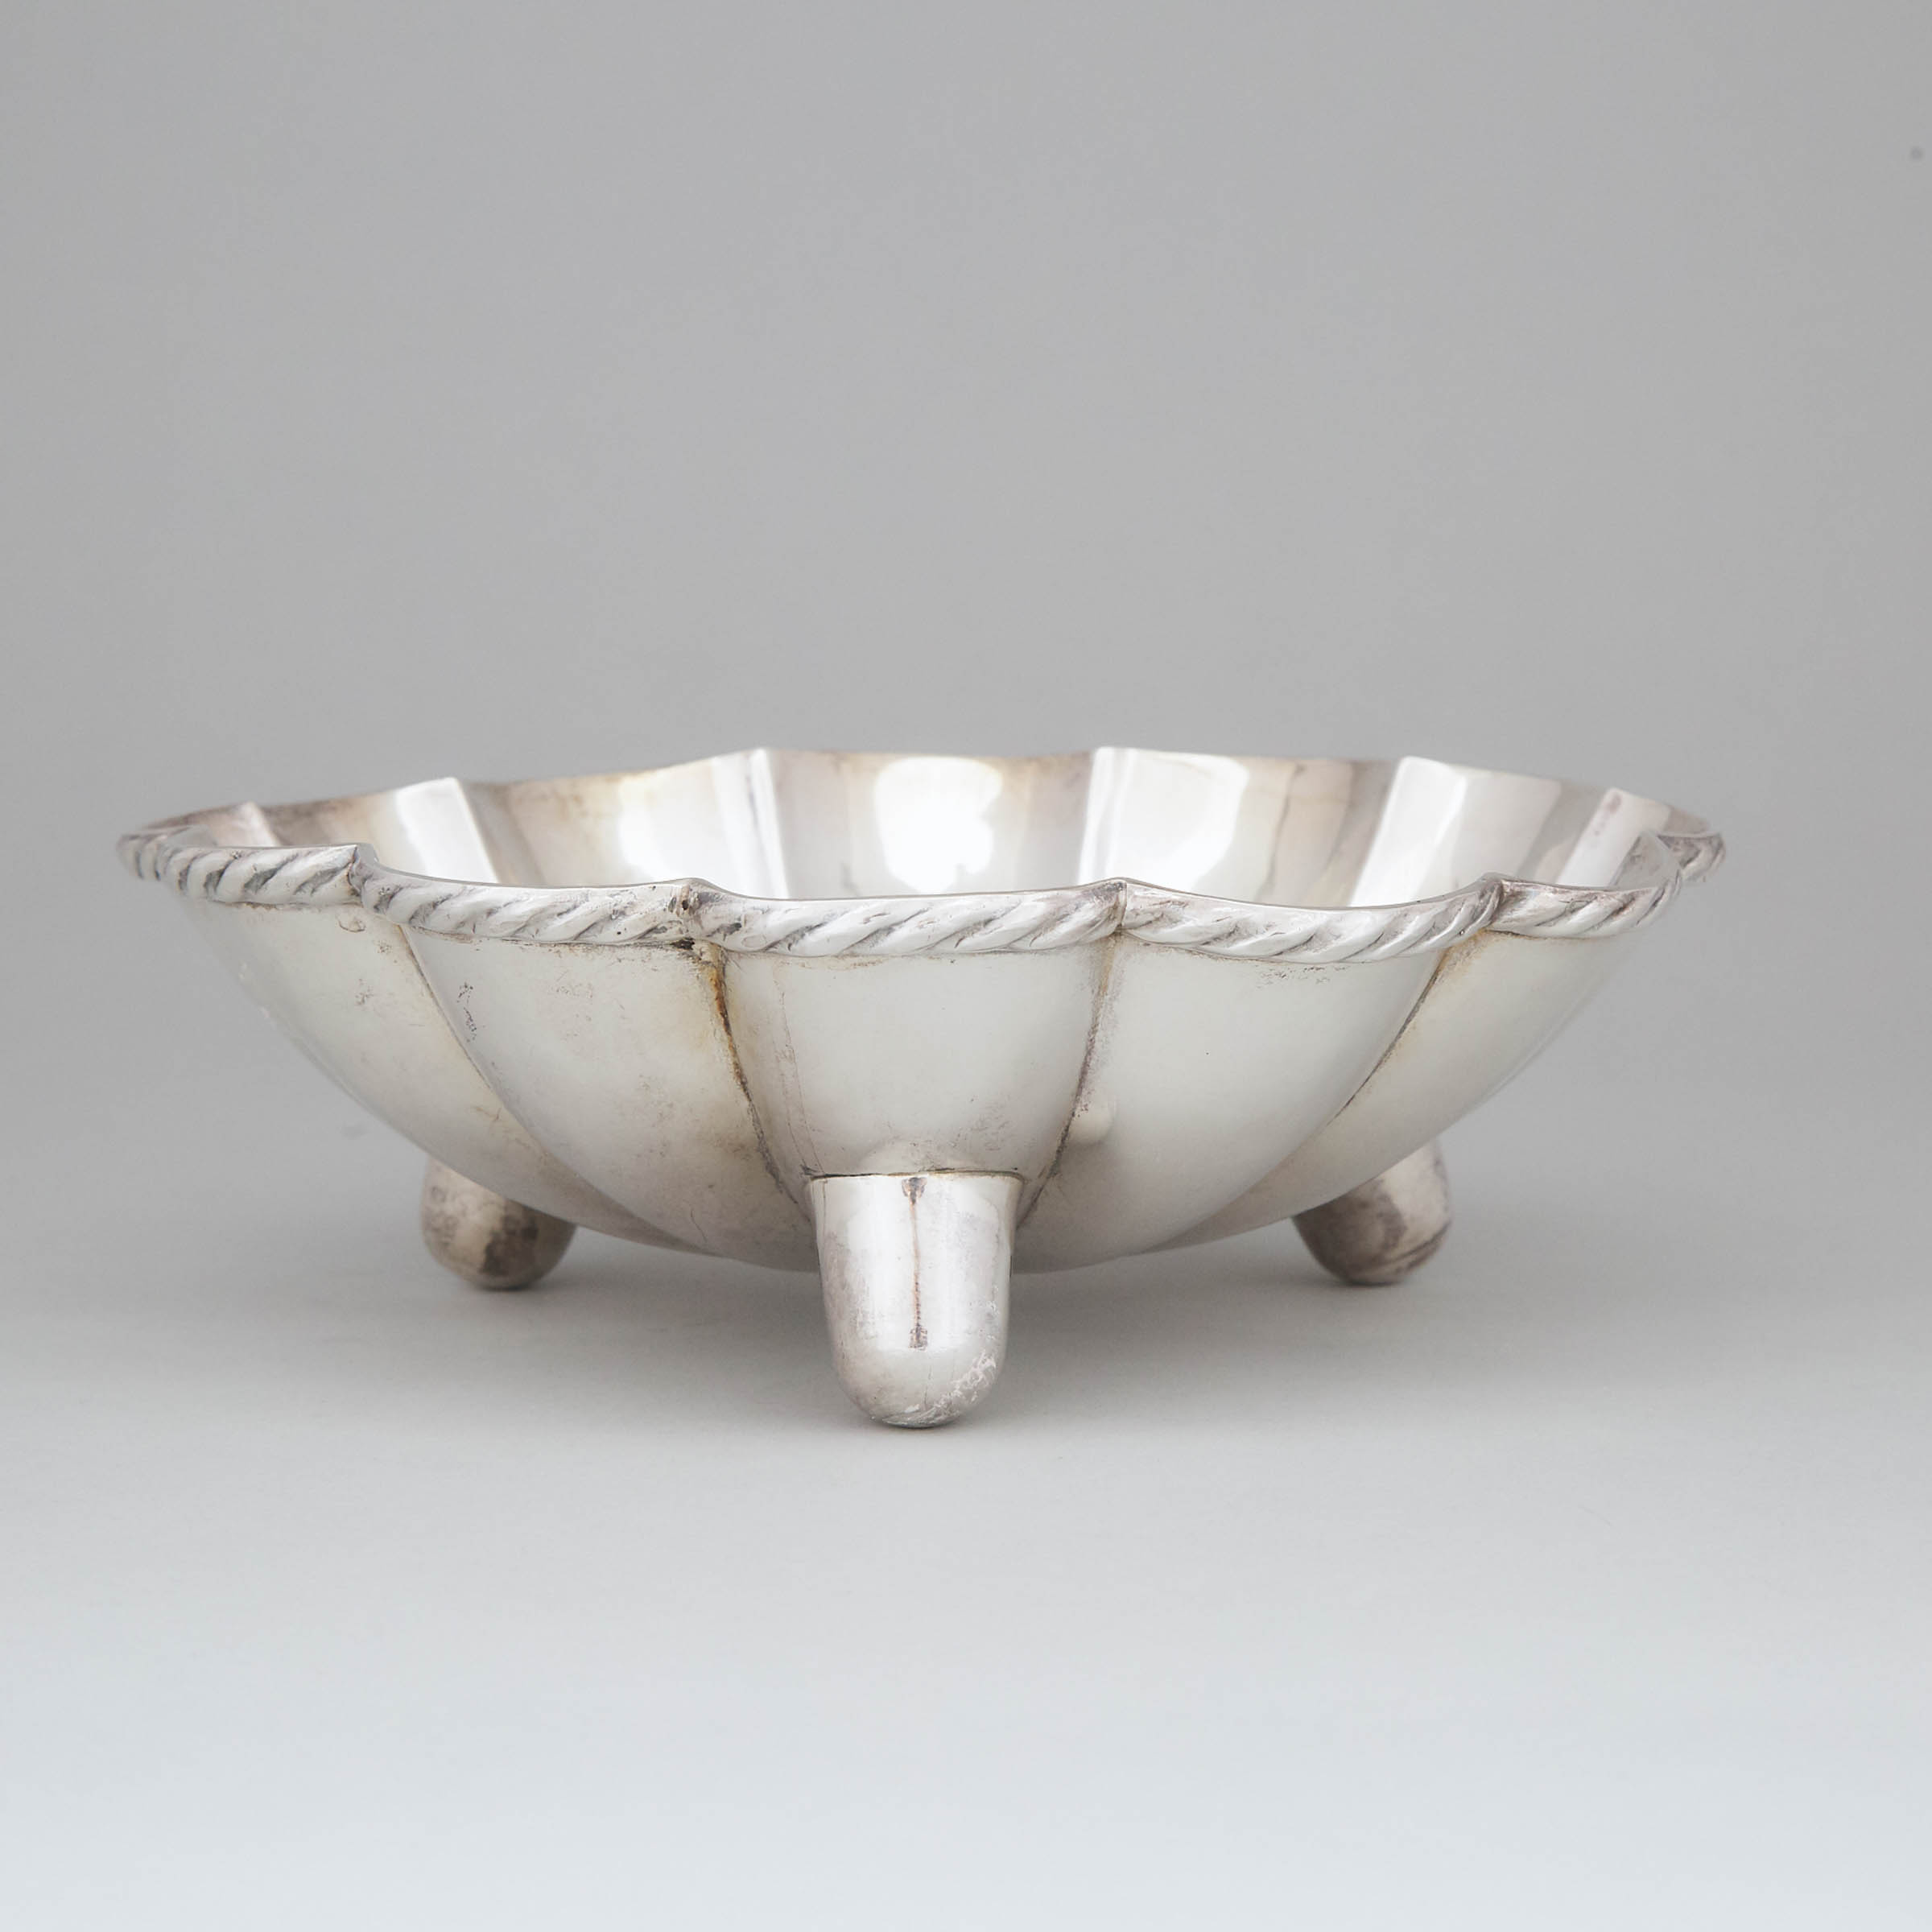 Peruvian Silver Lobed Circular Bowl, mid-20th century